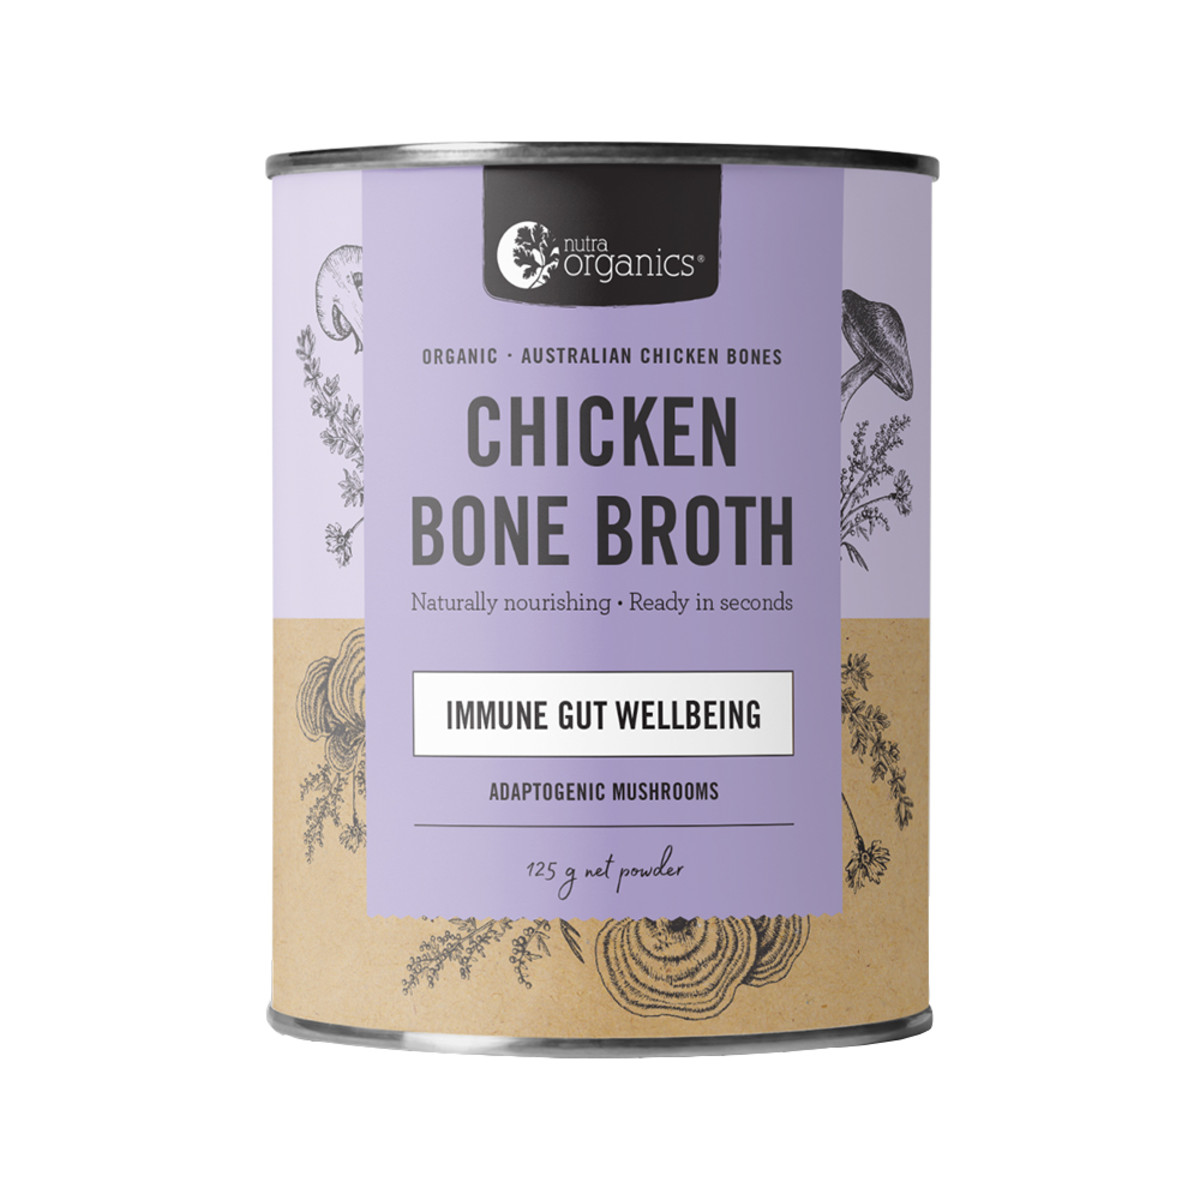 NUTRA ORGANICS -  Bone Broth Chicken Organic Adaptogenic Mushrooms